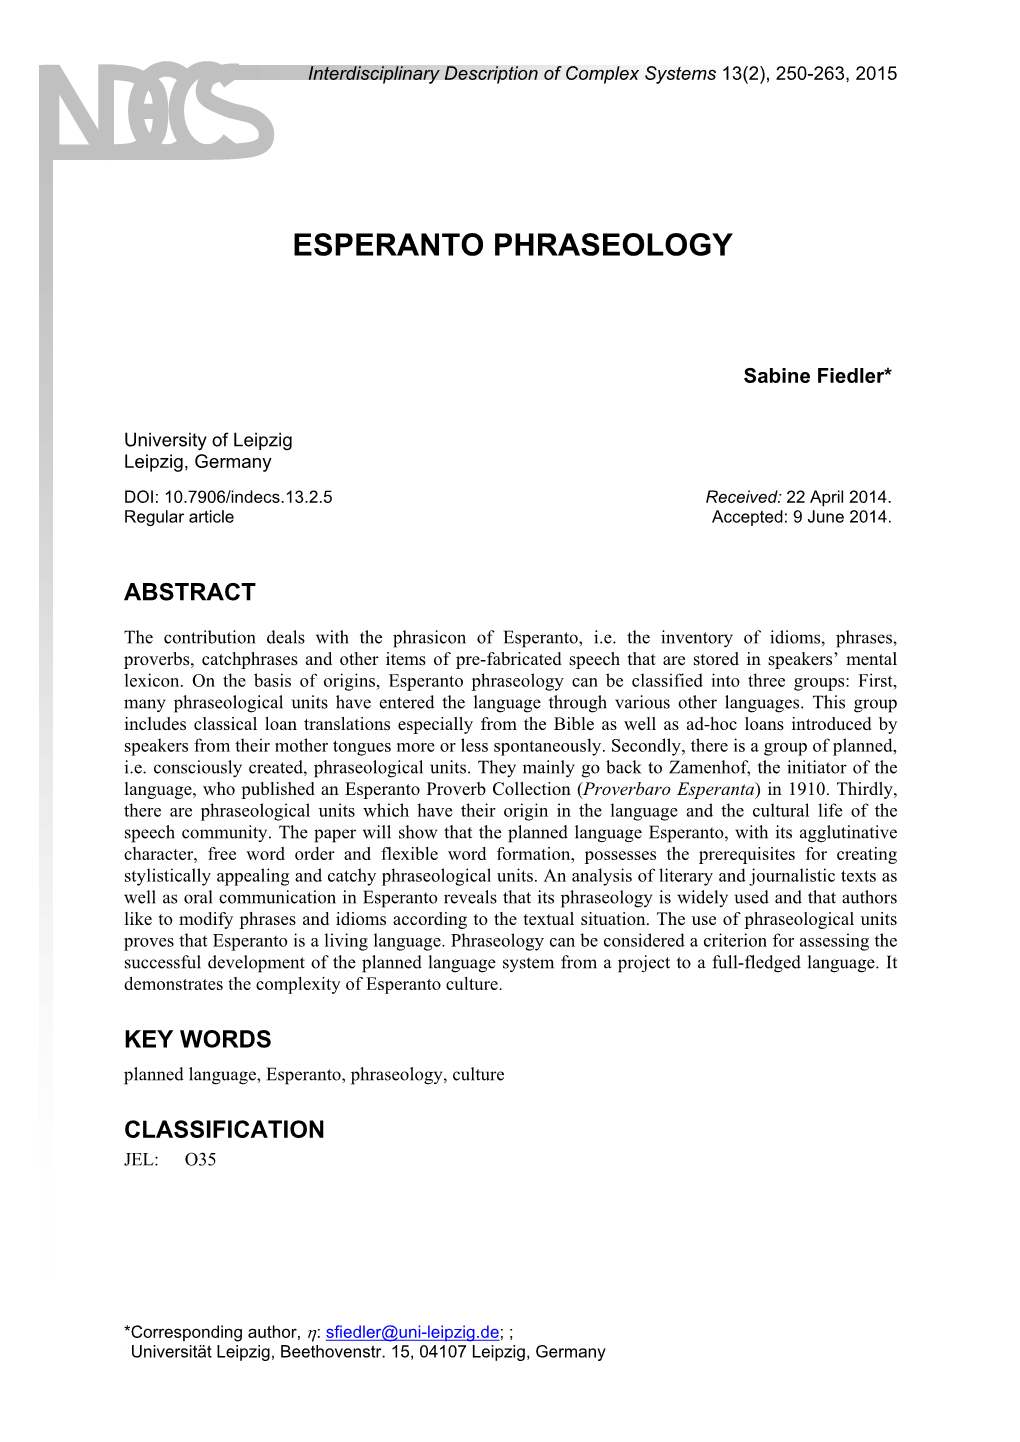 Esperanto Phraseology